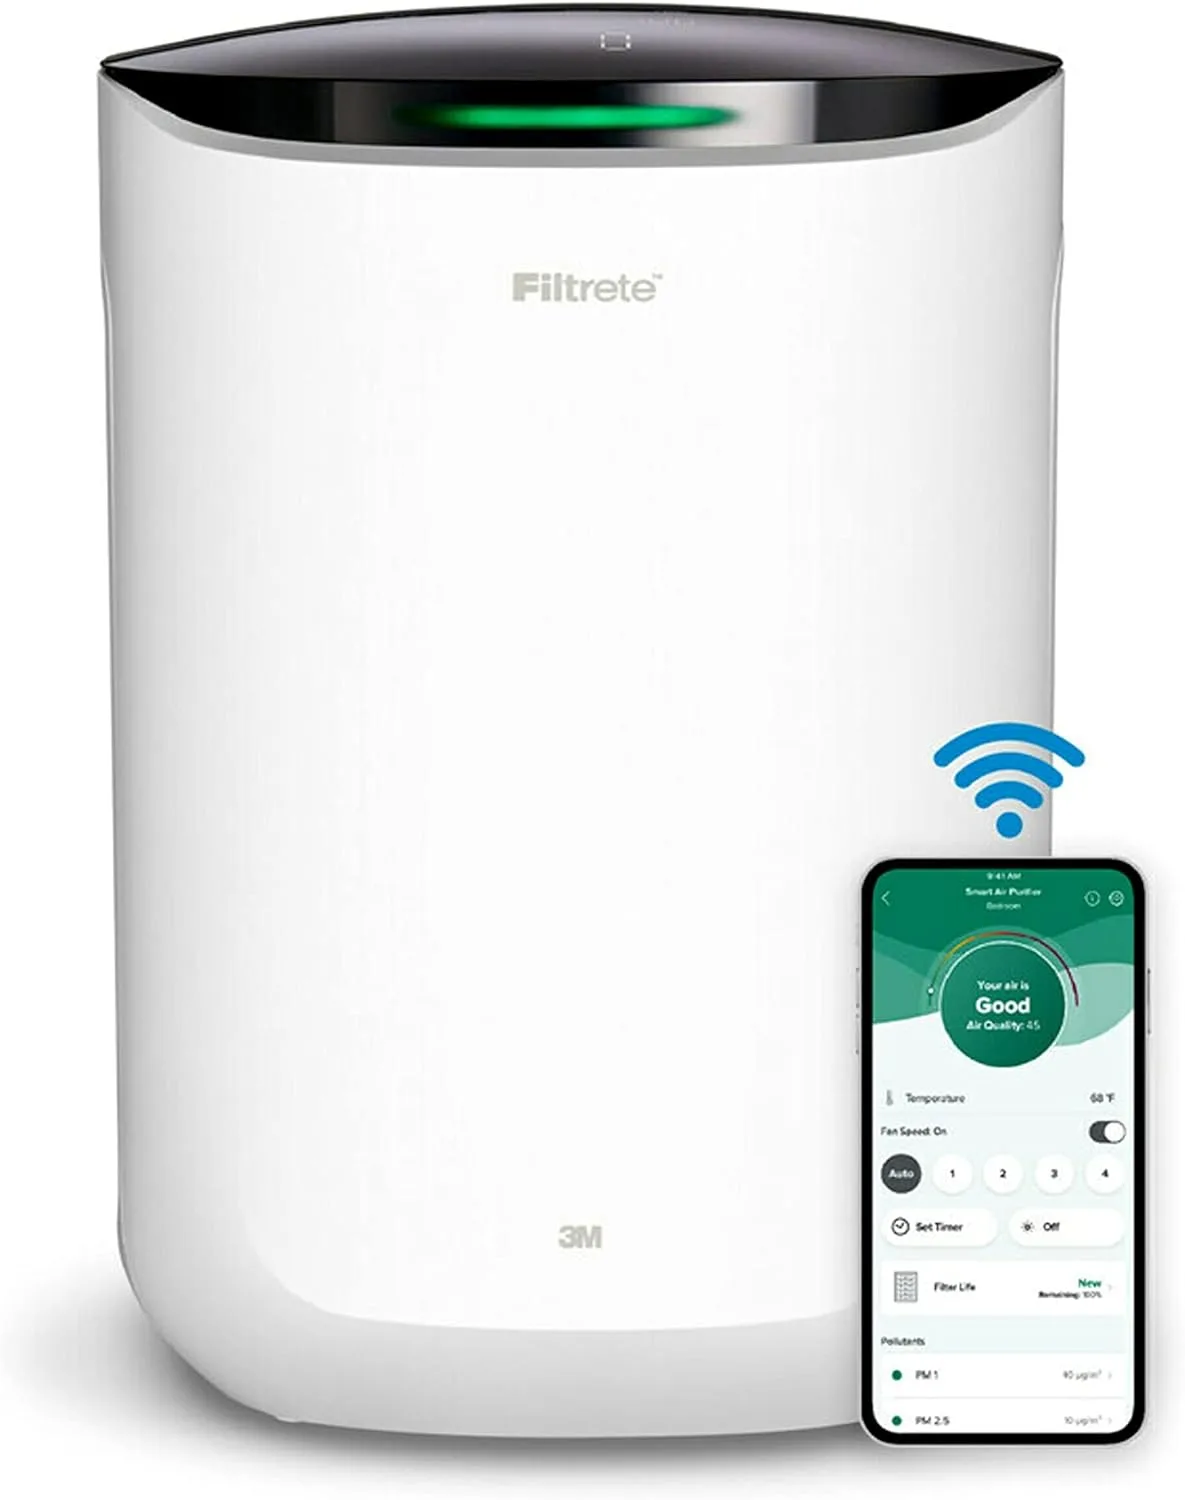 Filtrete Smart Air Purifier Review